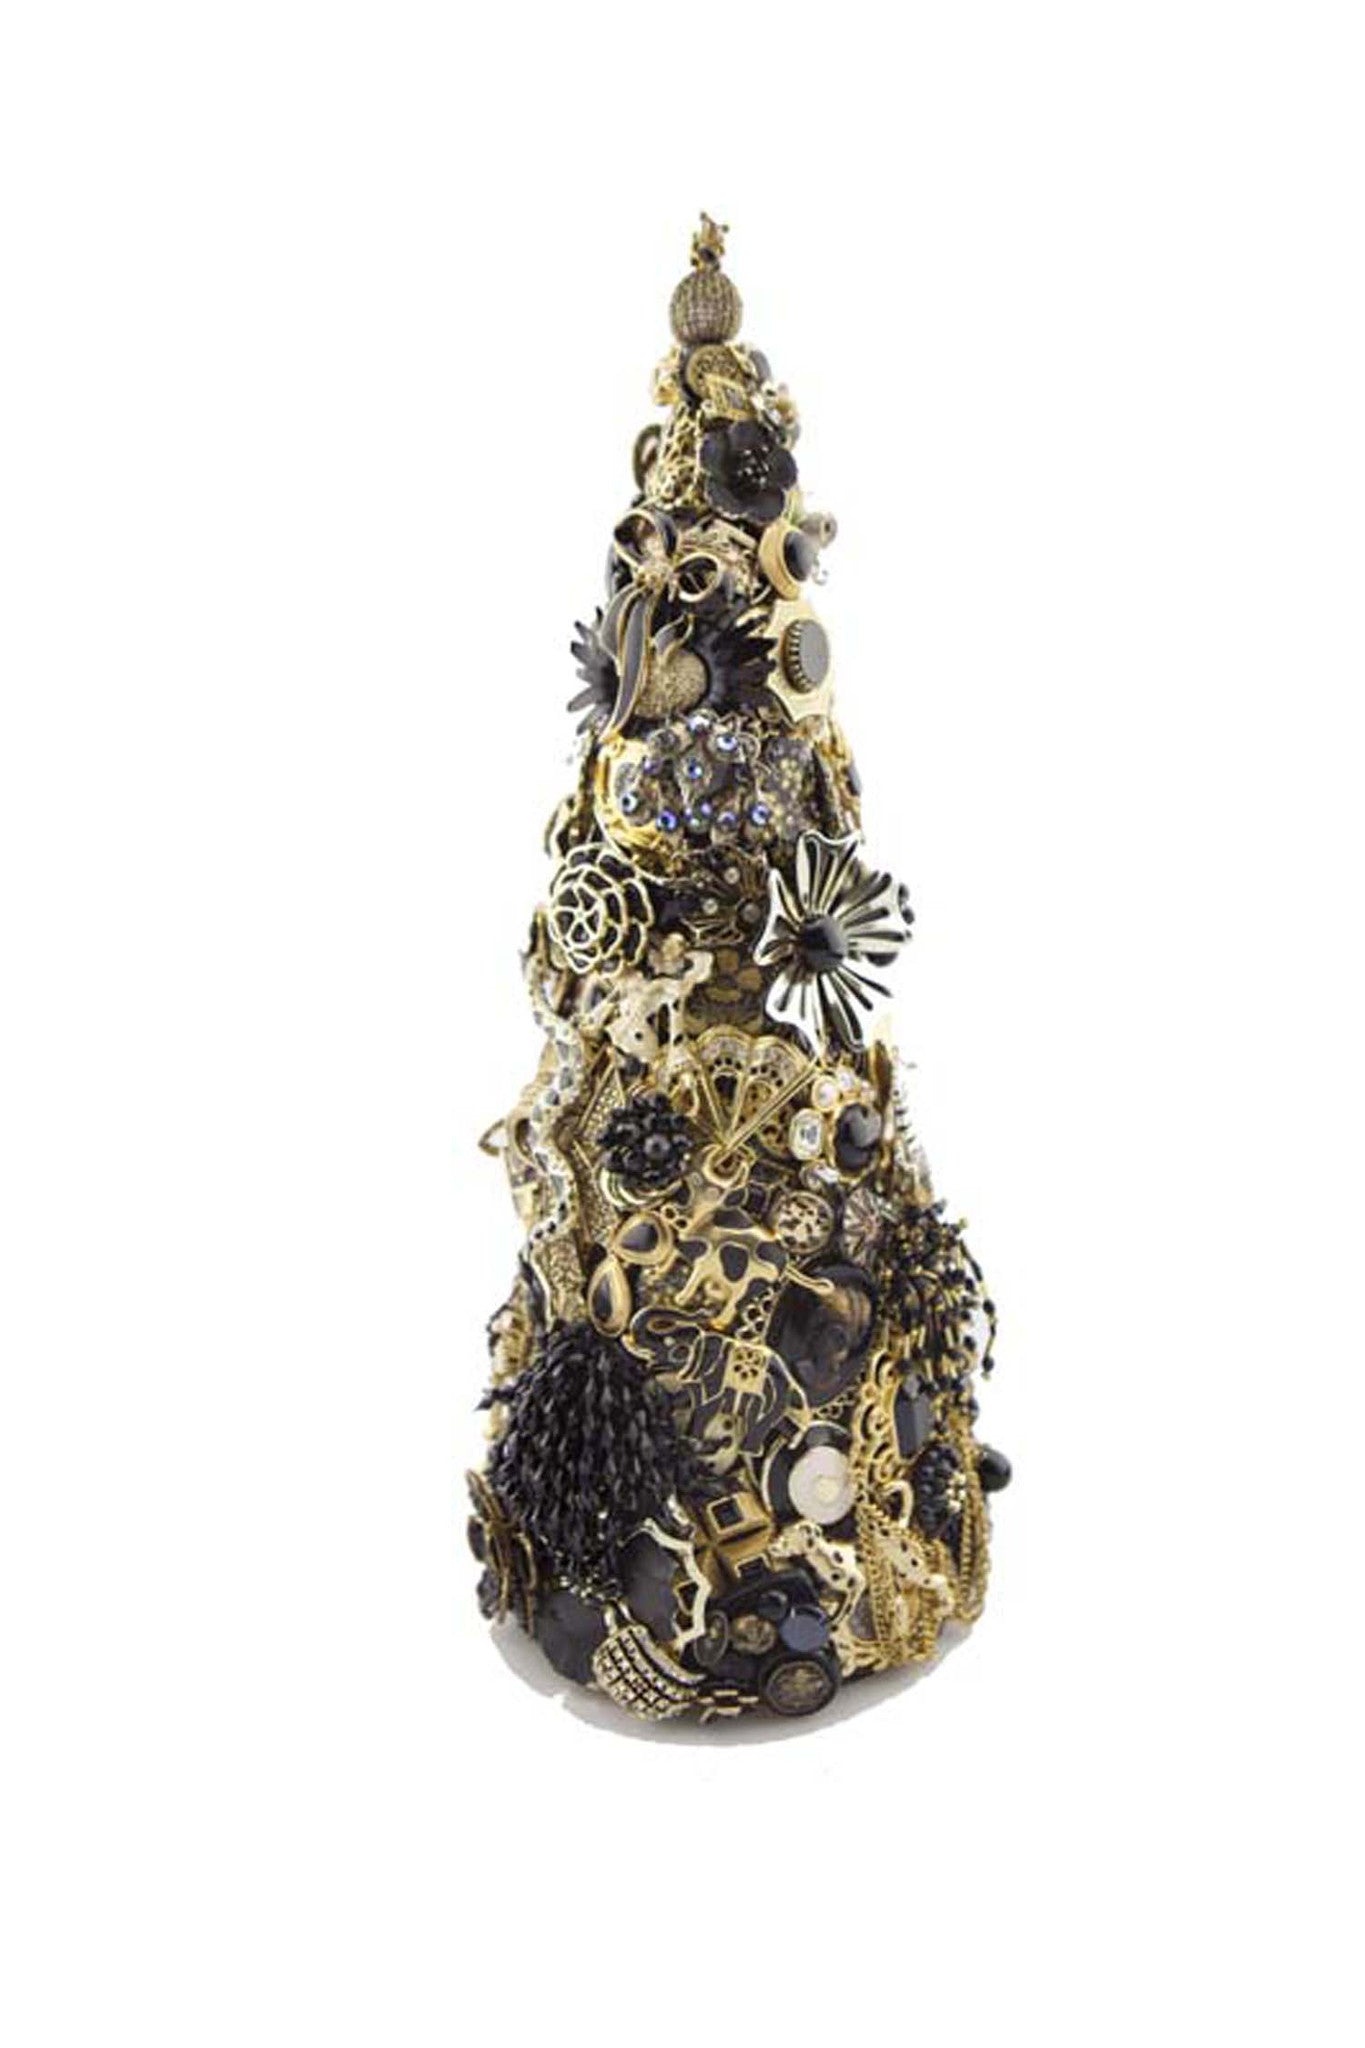 Beyond The Jewel Box-15" Tree/Gold & Black